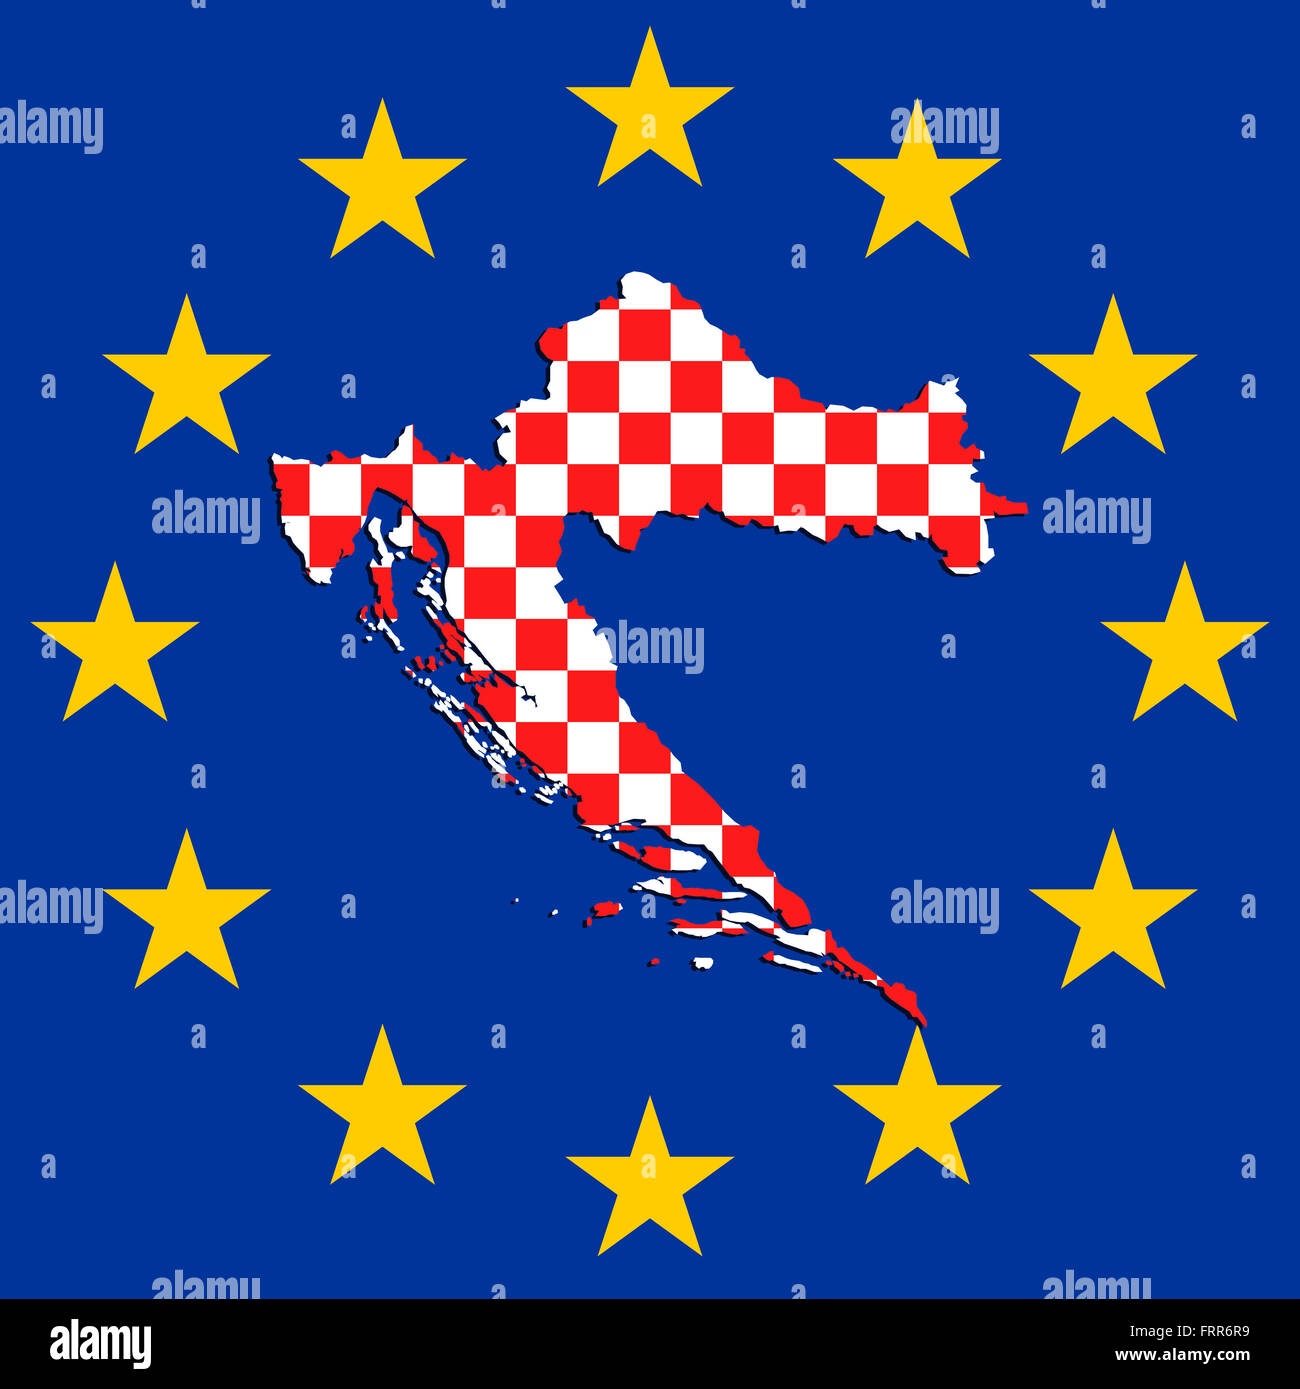 Croatia in EU. Outline of Croatia inside of european stars. Stock Photo